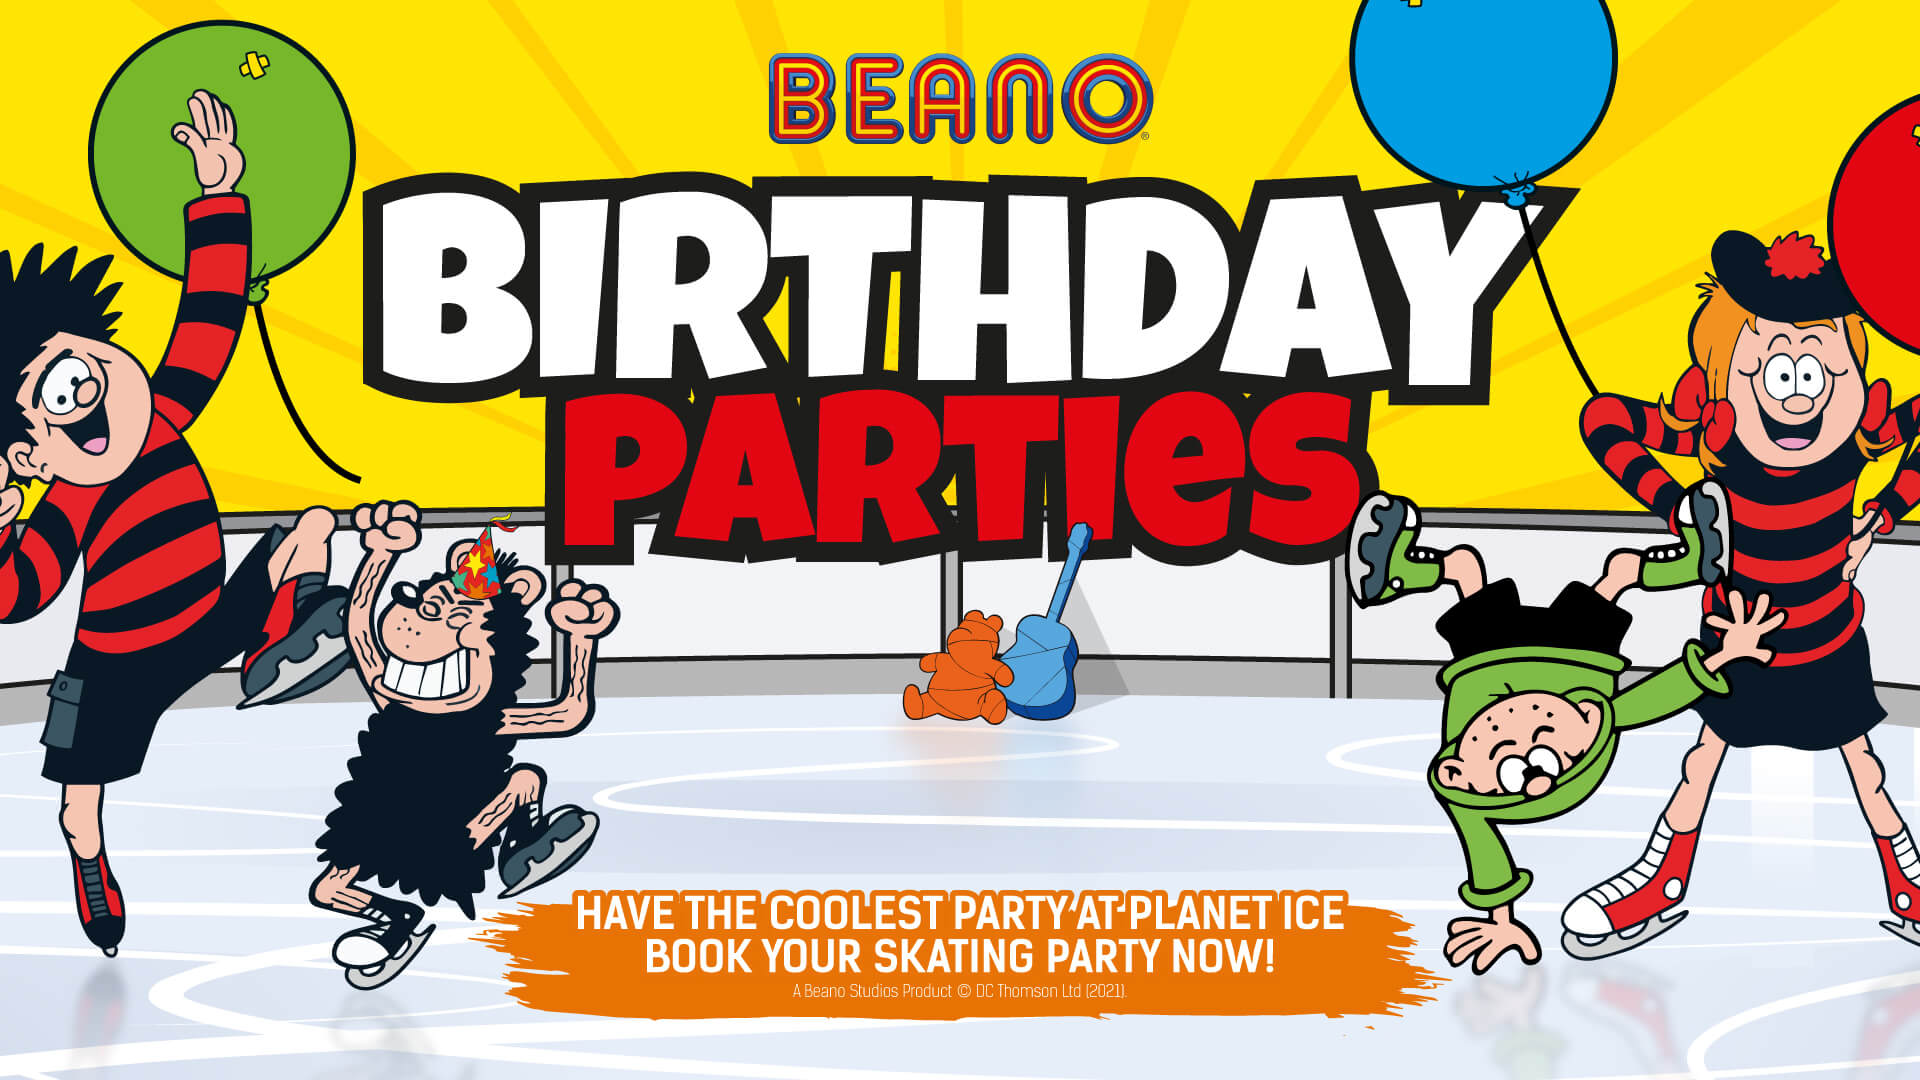 Beano Birthday Parties